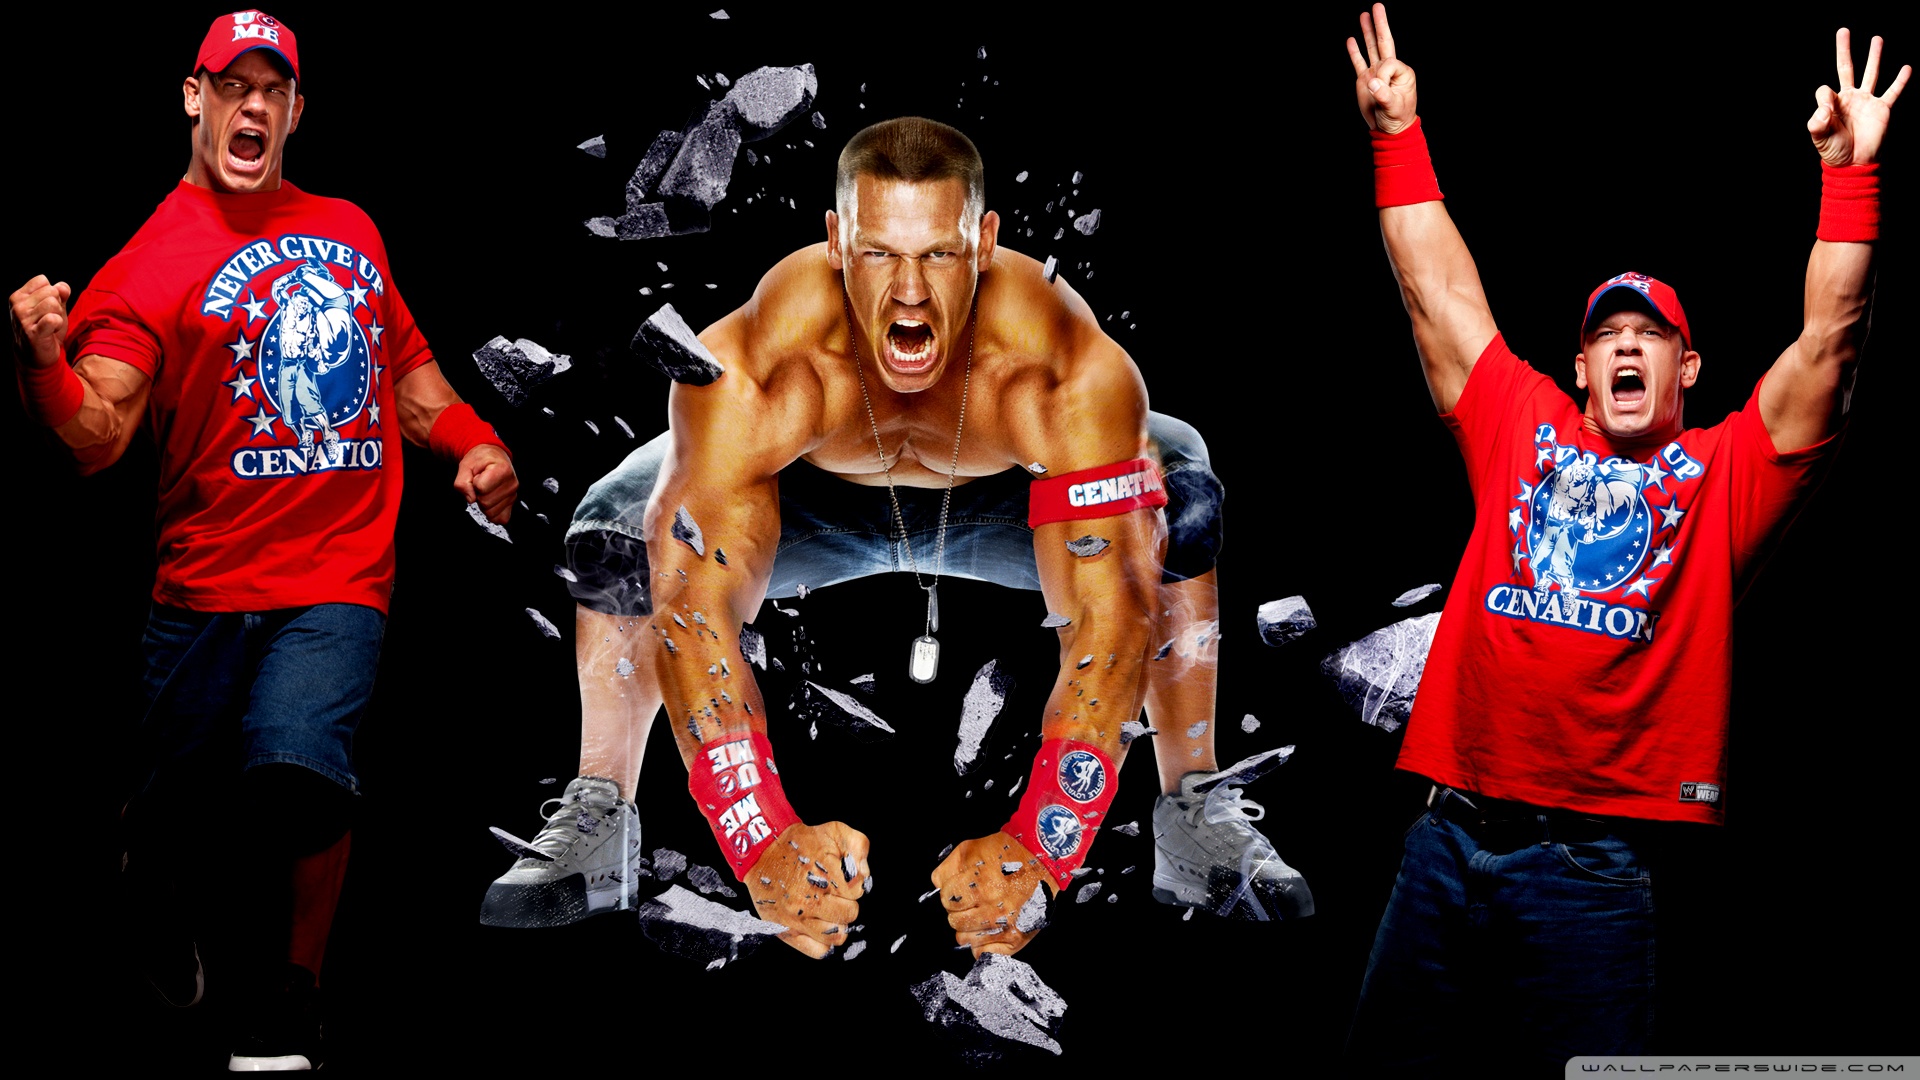 John Cena Wallpapers: 10 must downloads